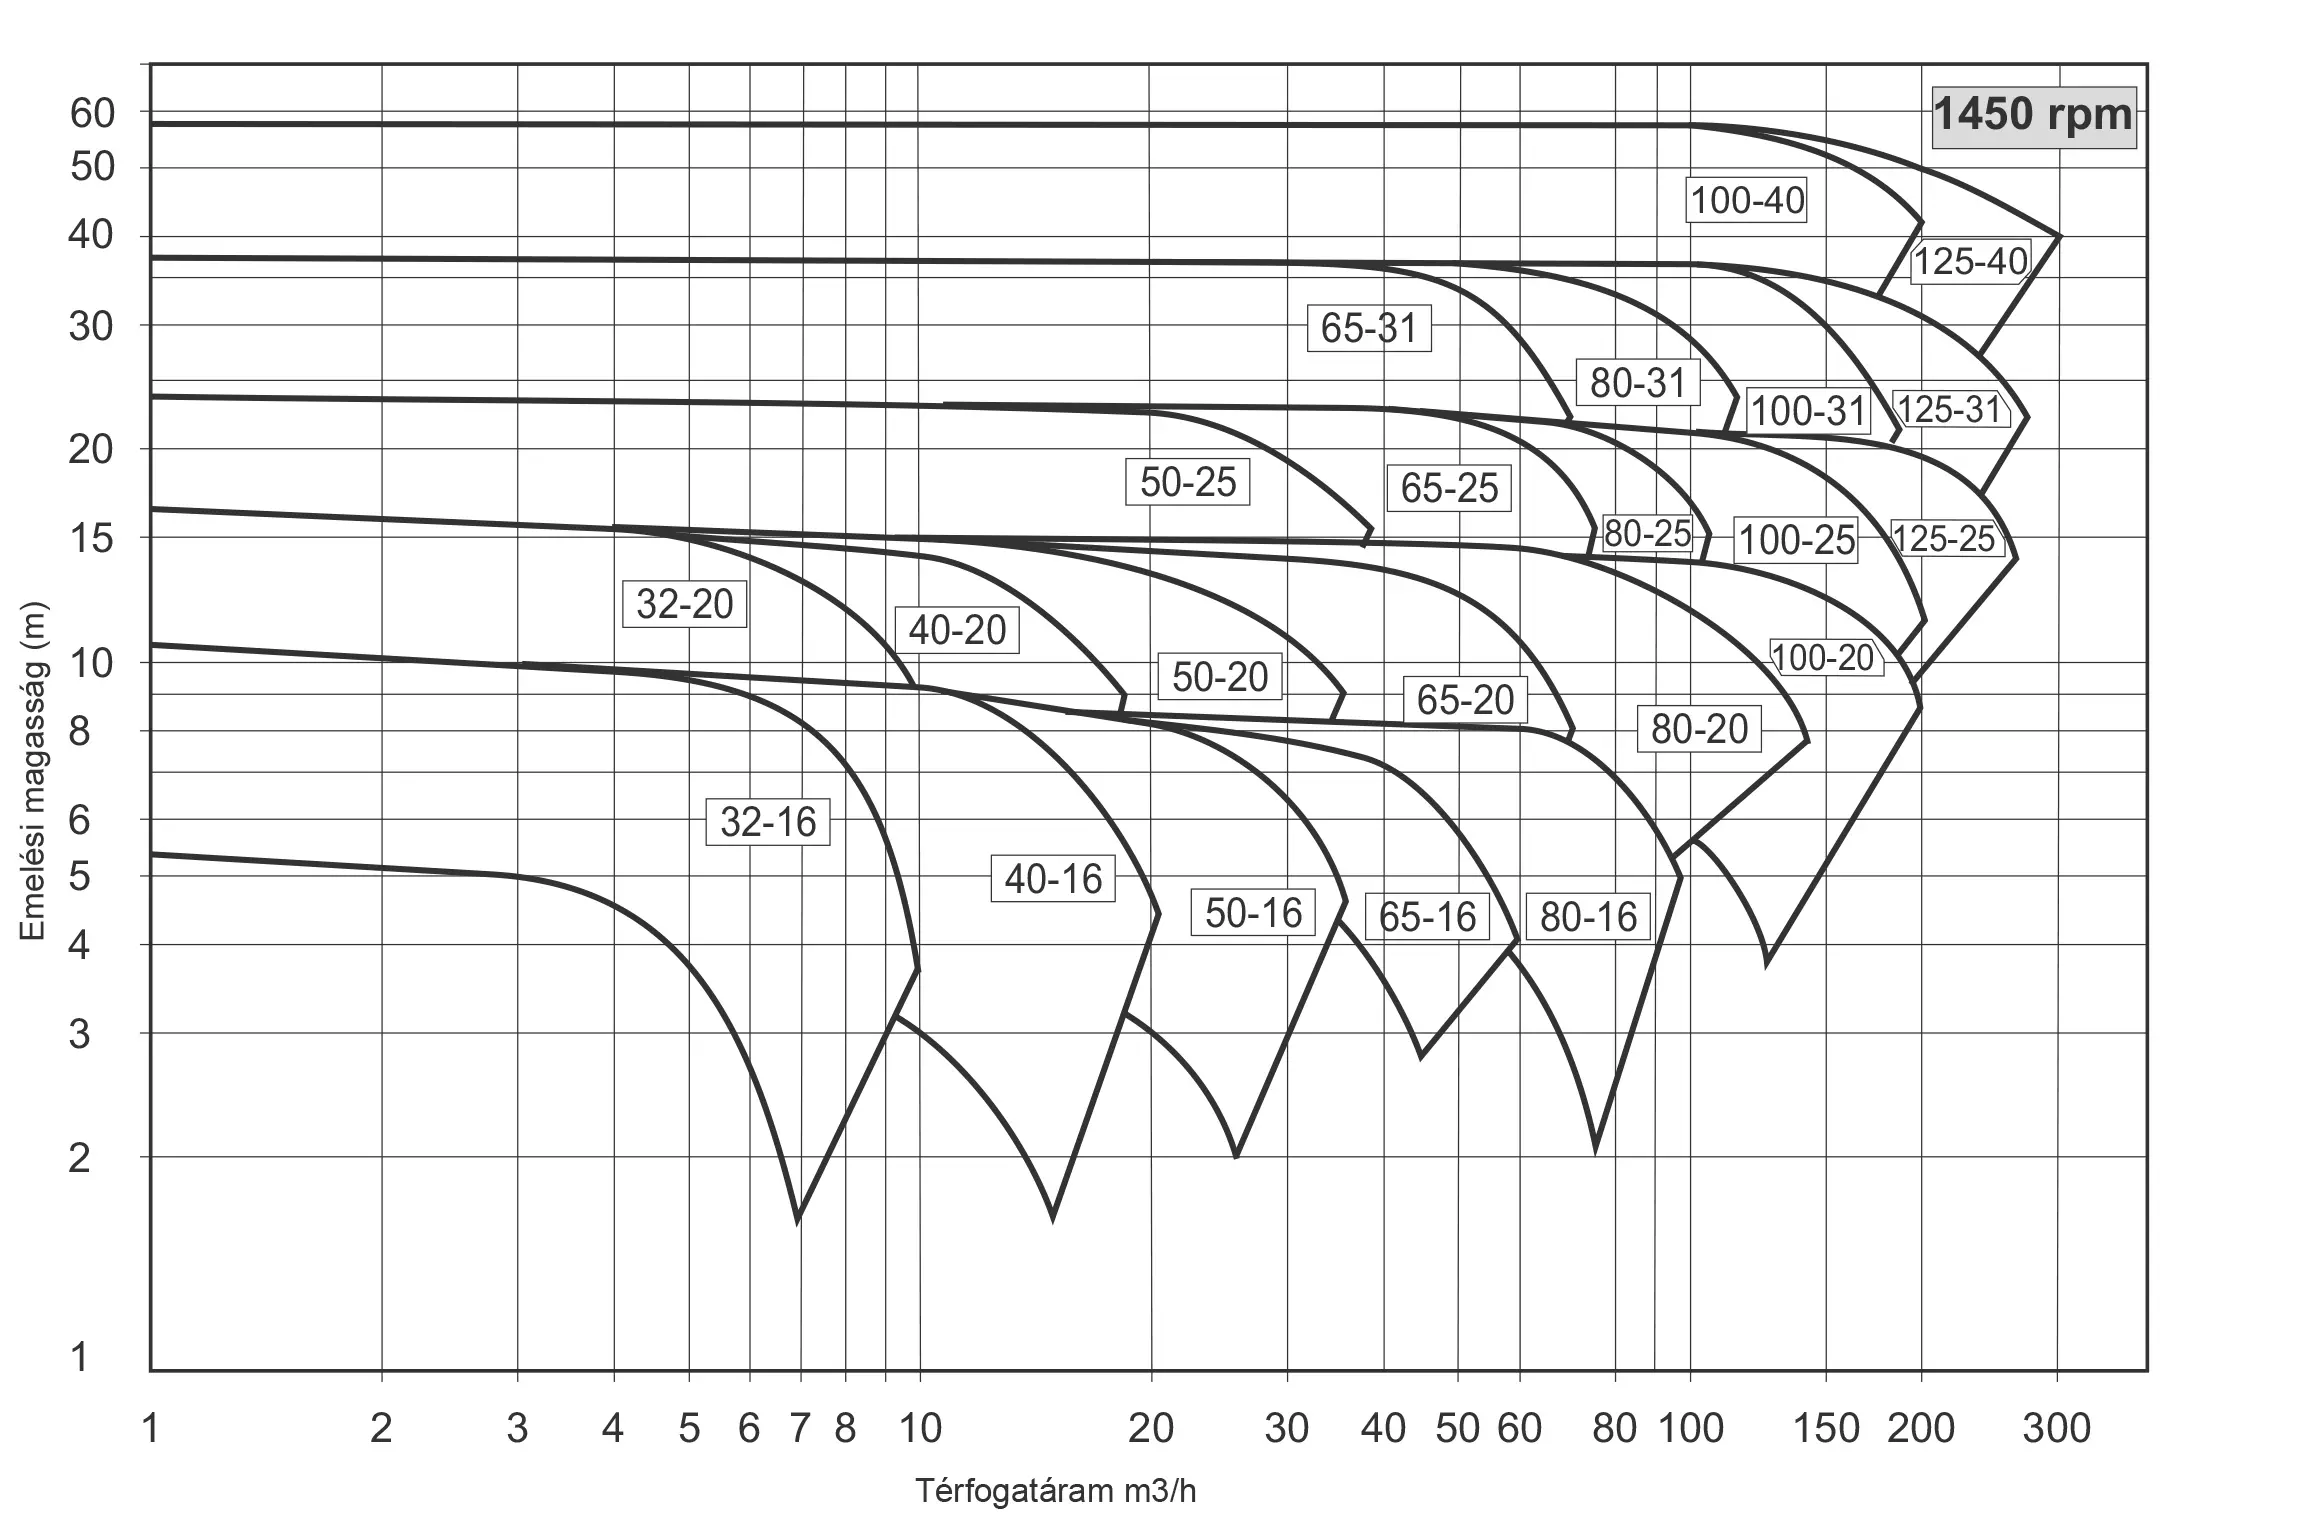 RD Performance curves